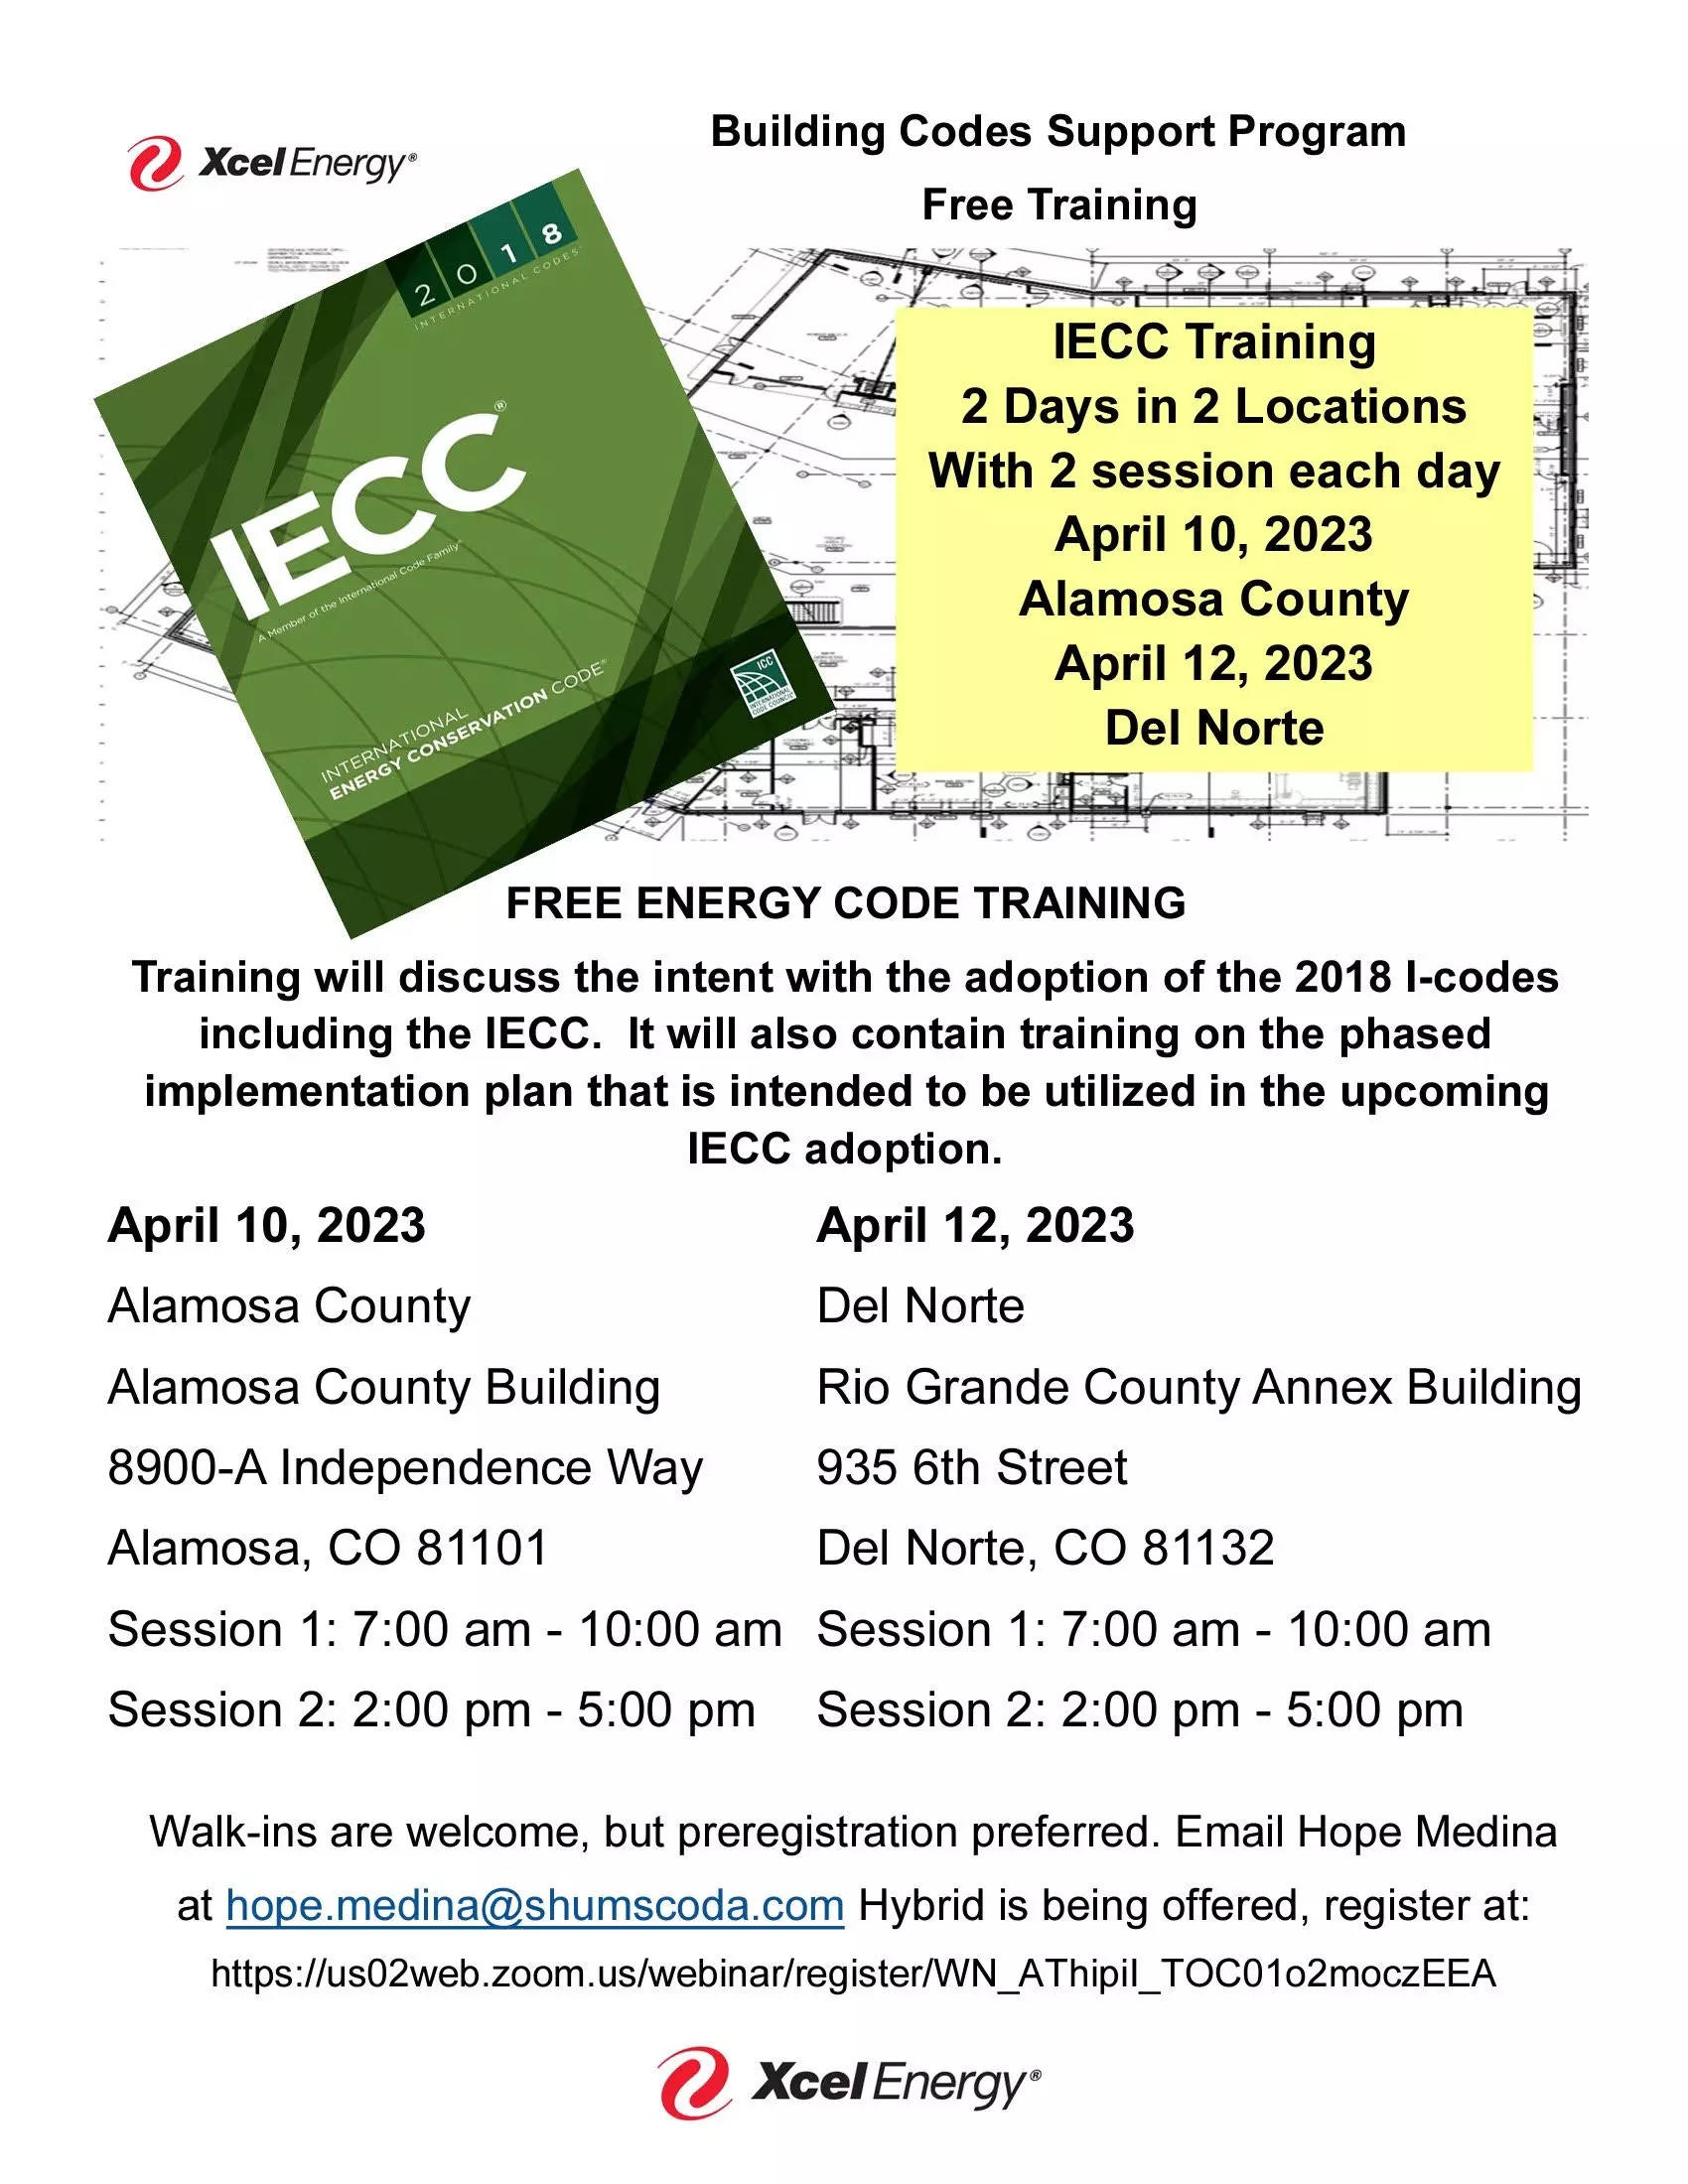 Building Codes Support Program Free Training Flier.jpg